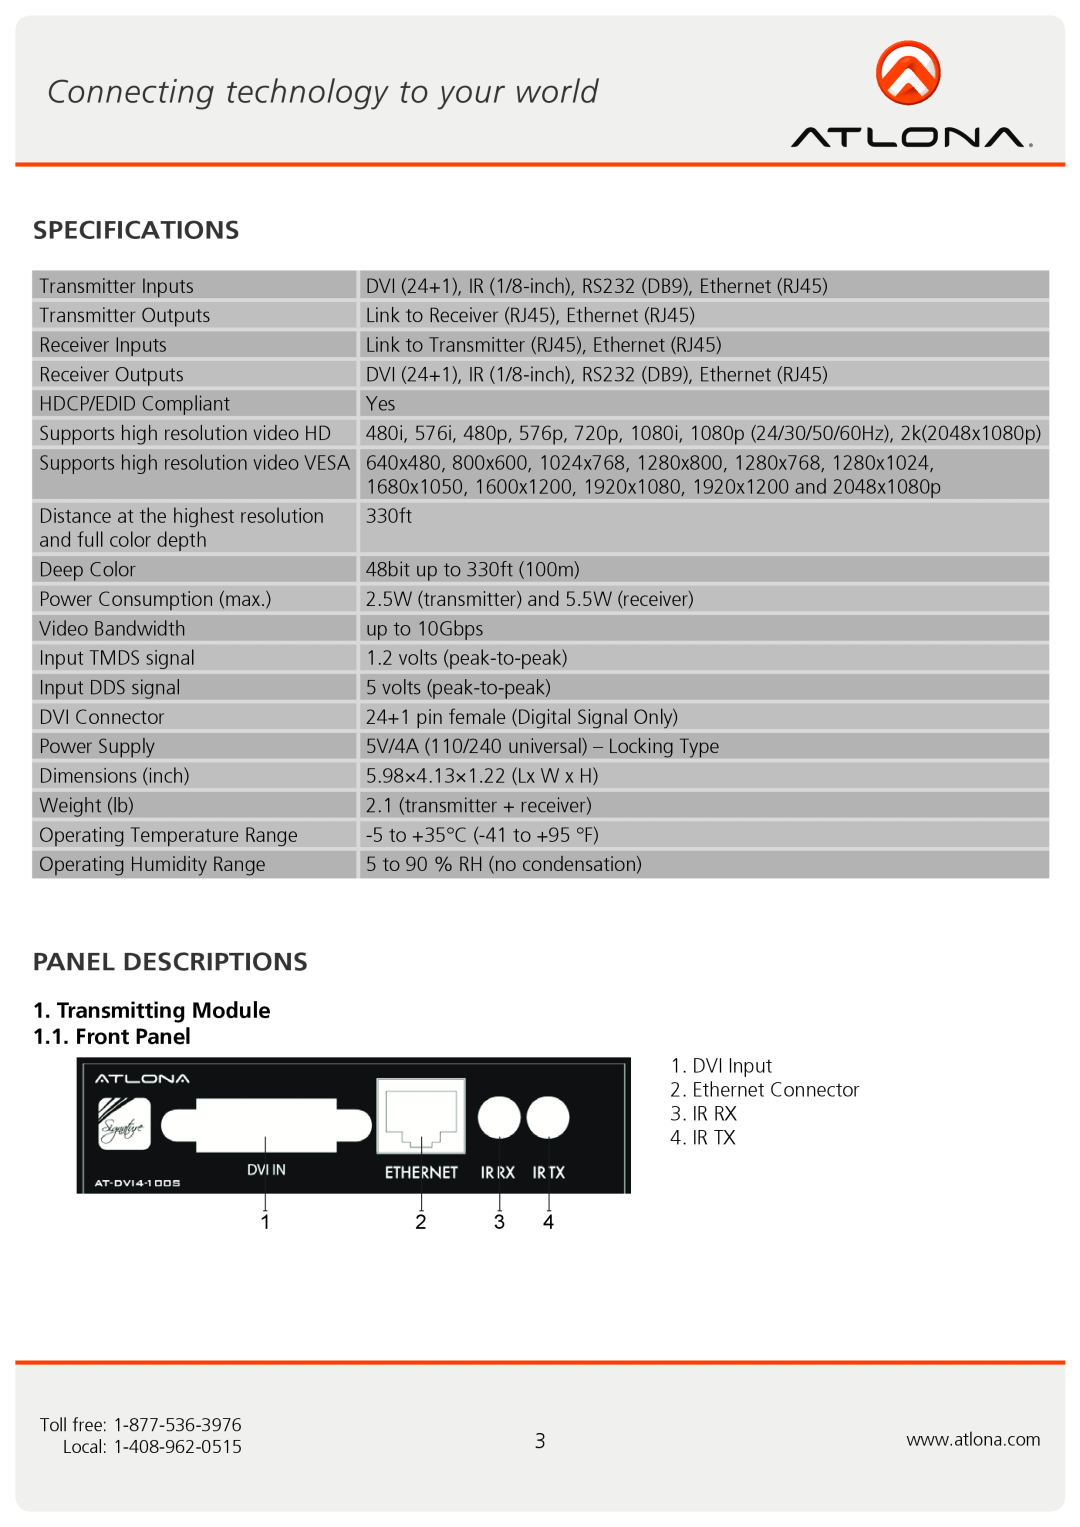 Atlona AT-DVI4-100SR user manual Specifications, Panel Descriptions, Transmitting Module 1.1. Front Panel 